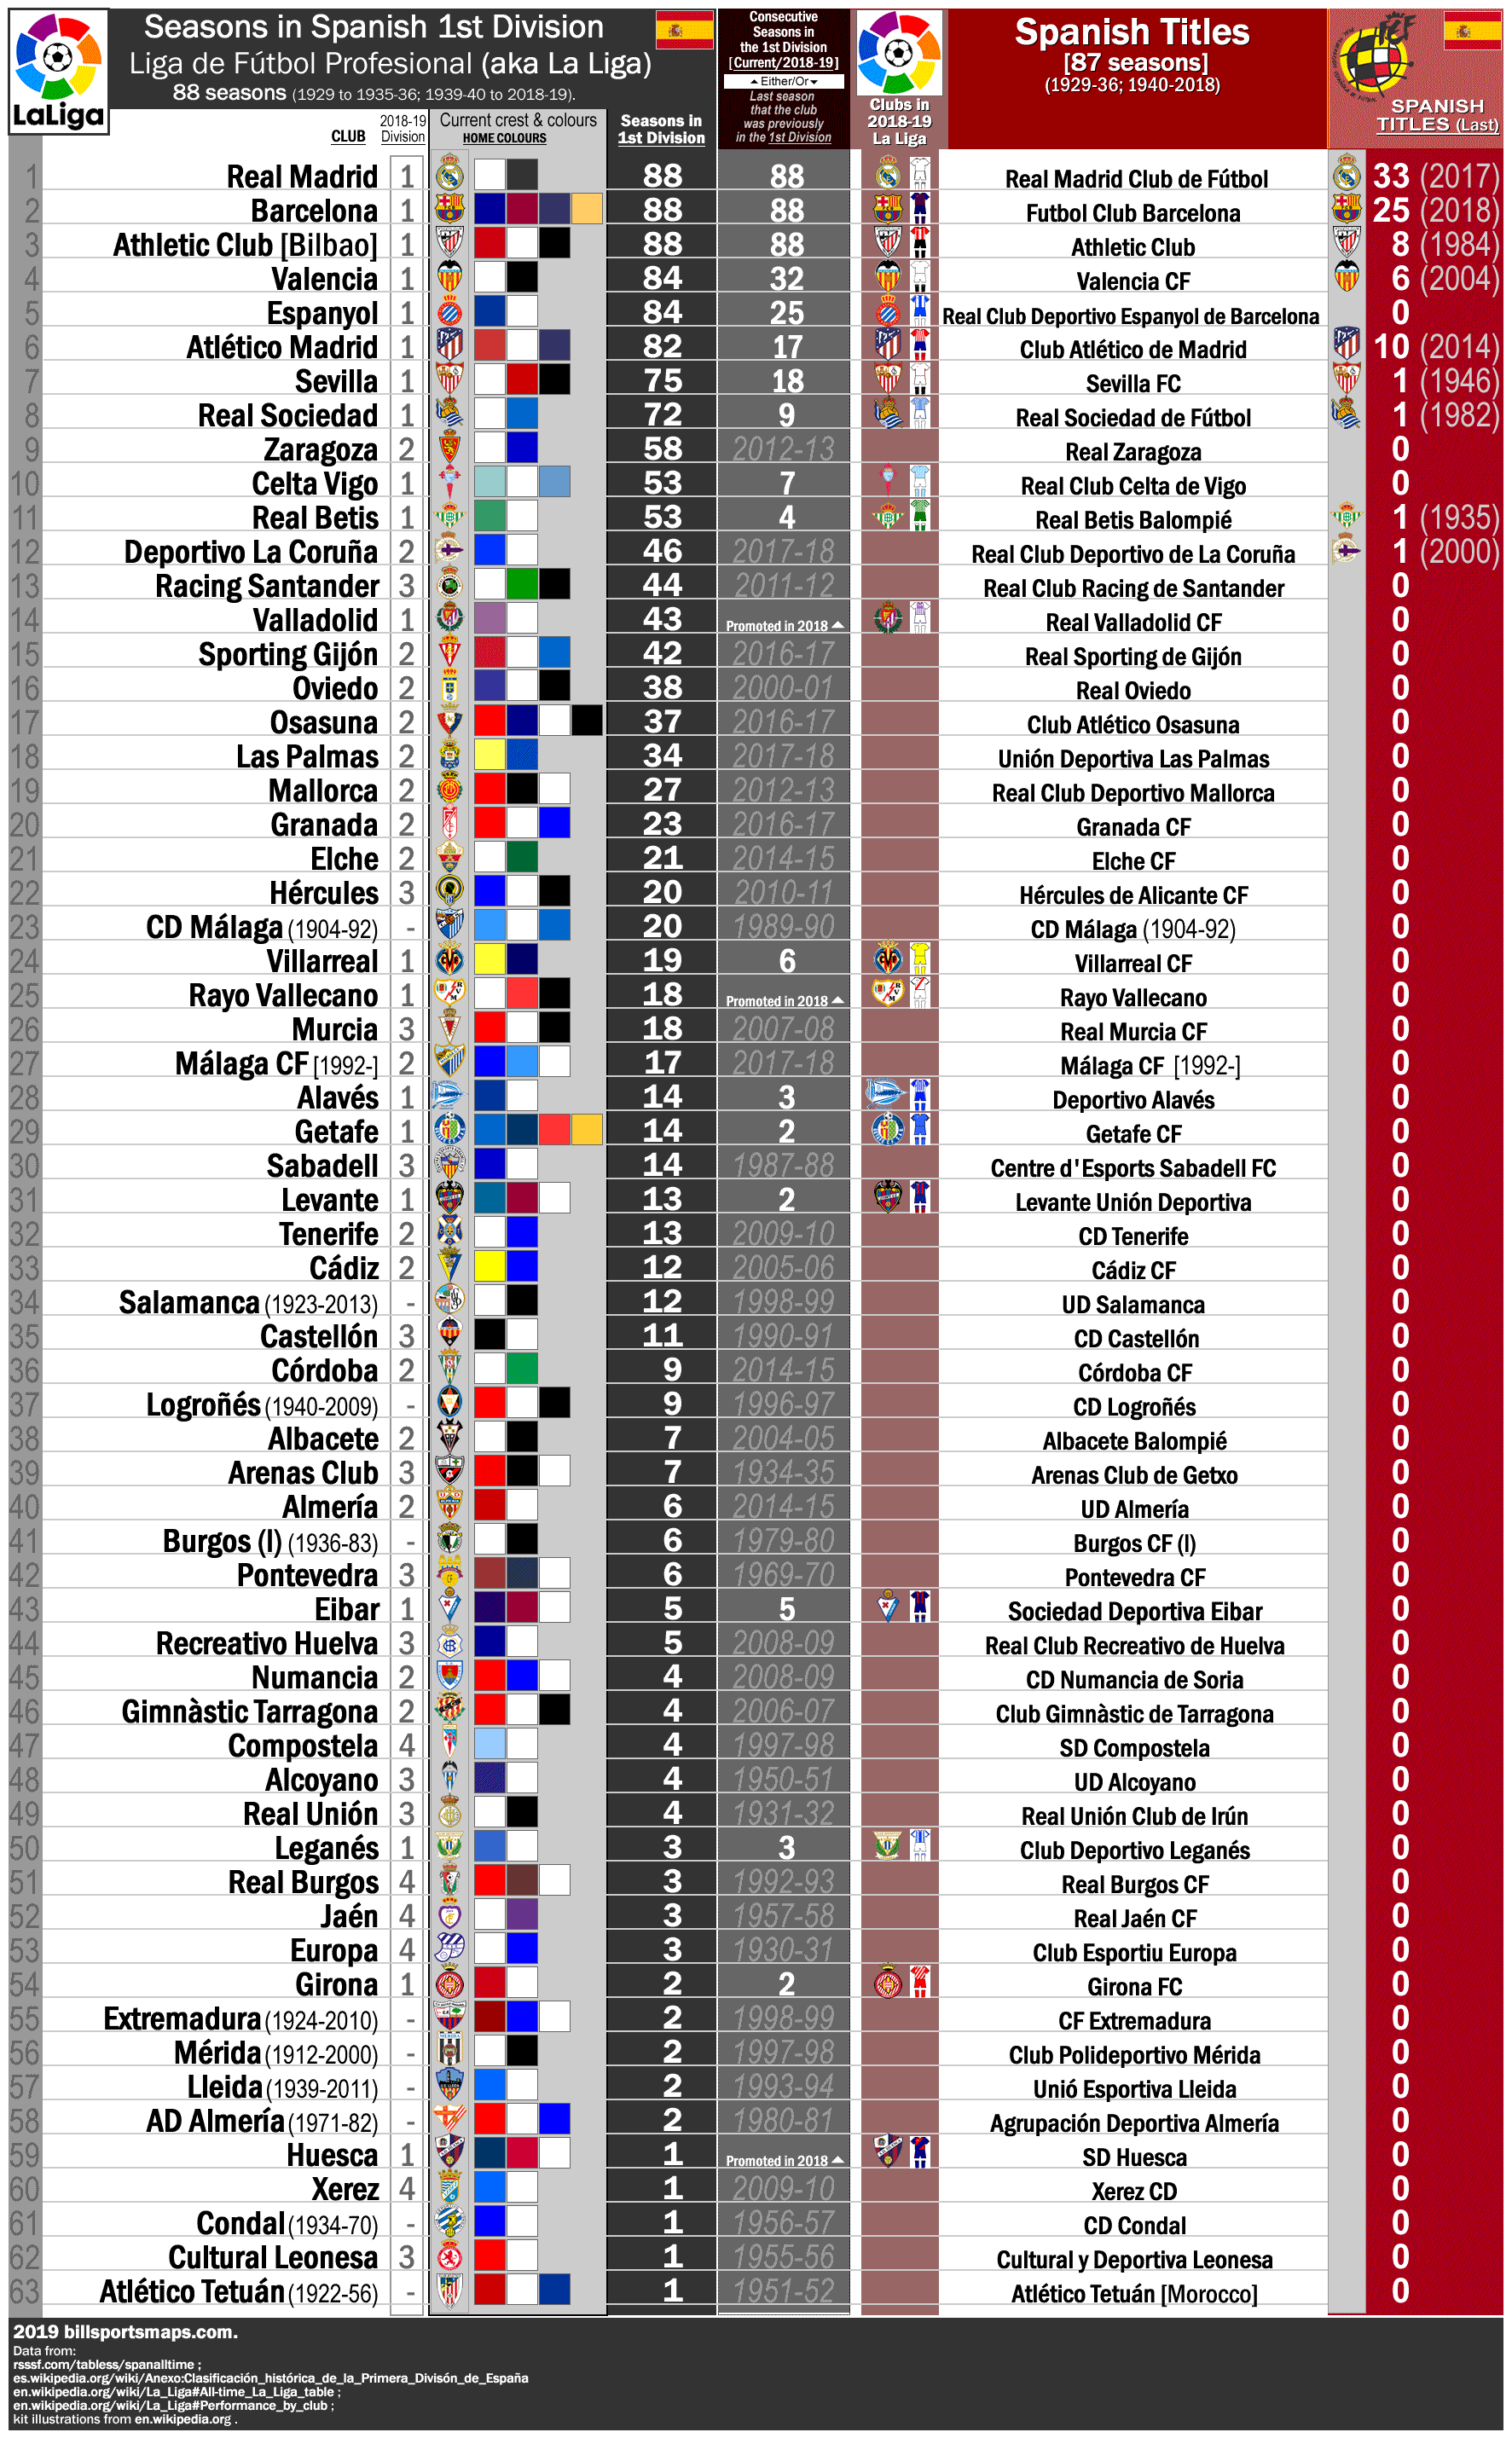 la liga winners 2000 to 2018